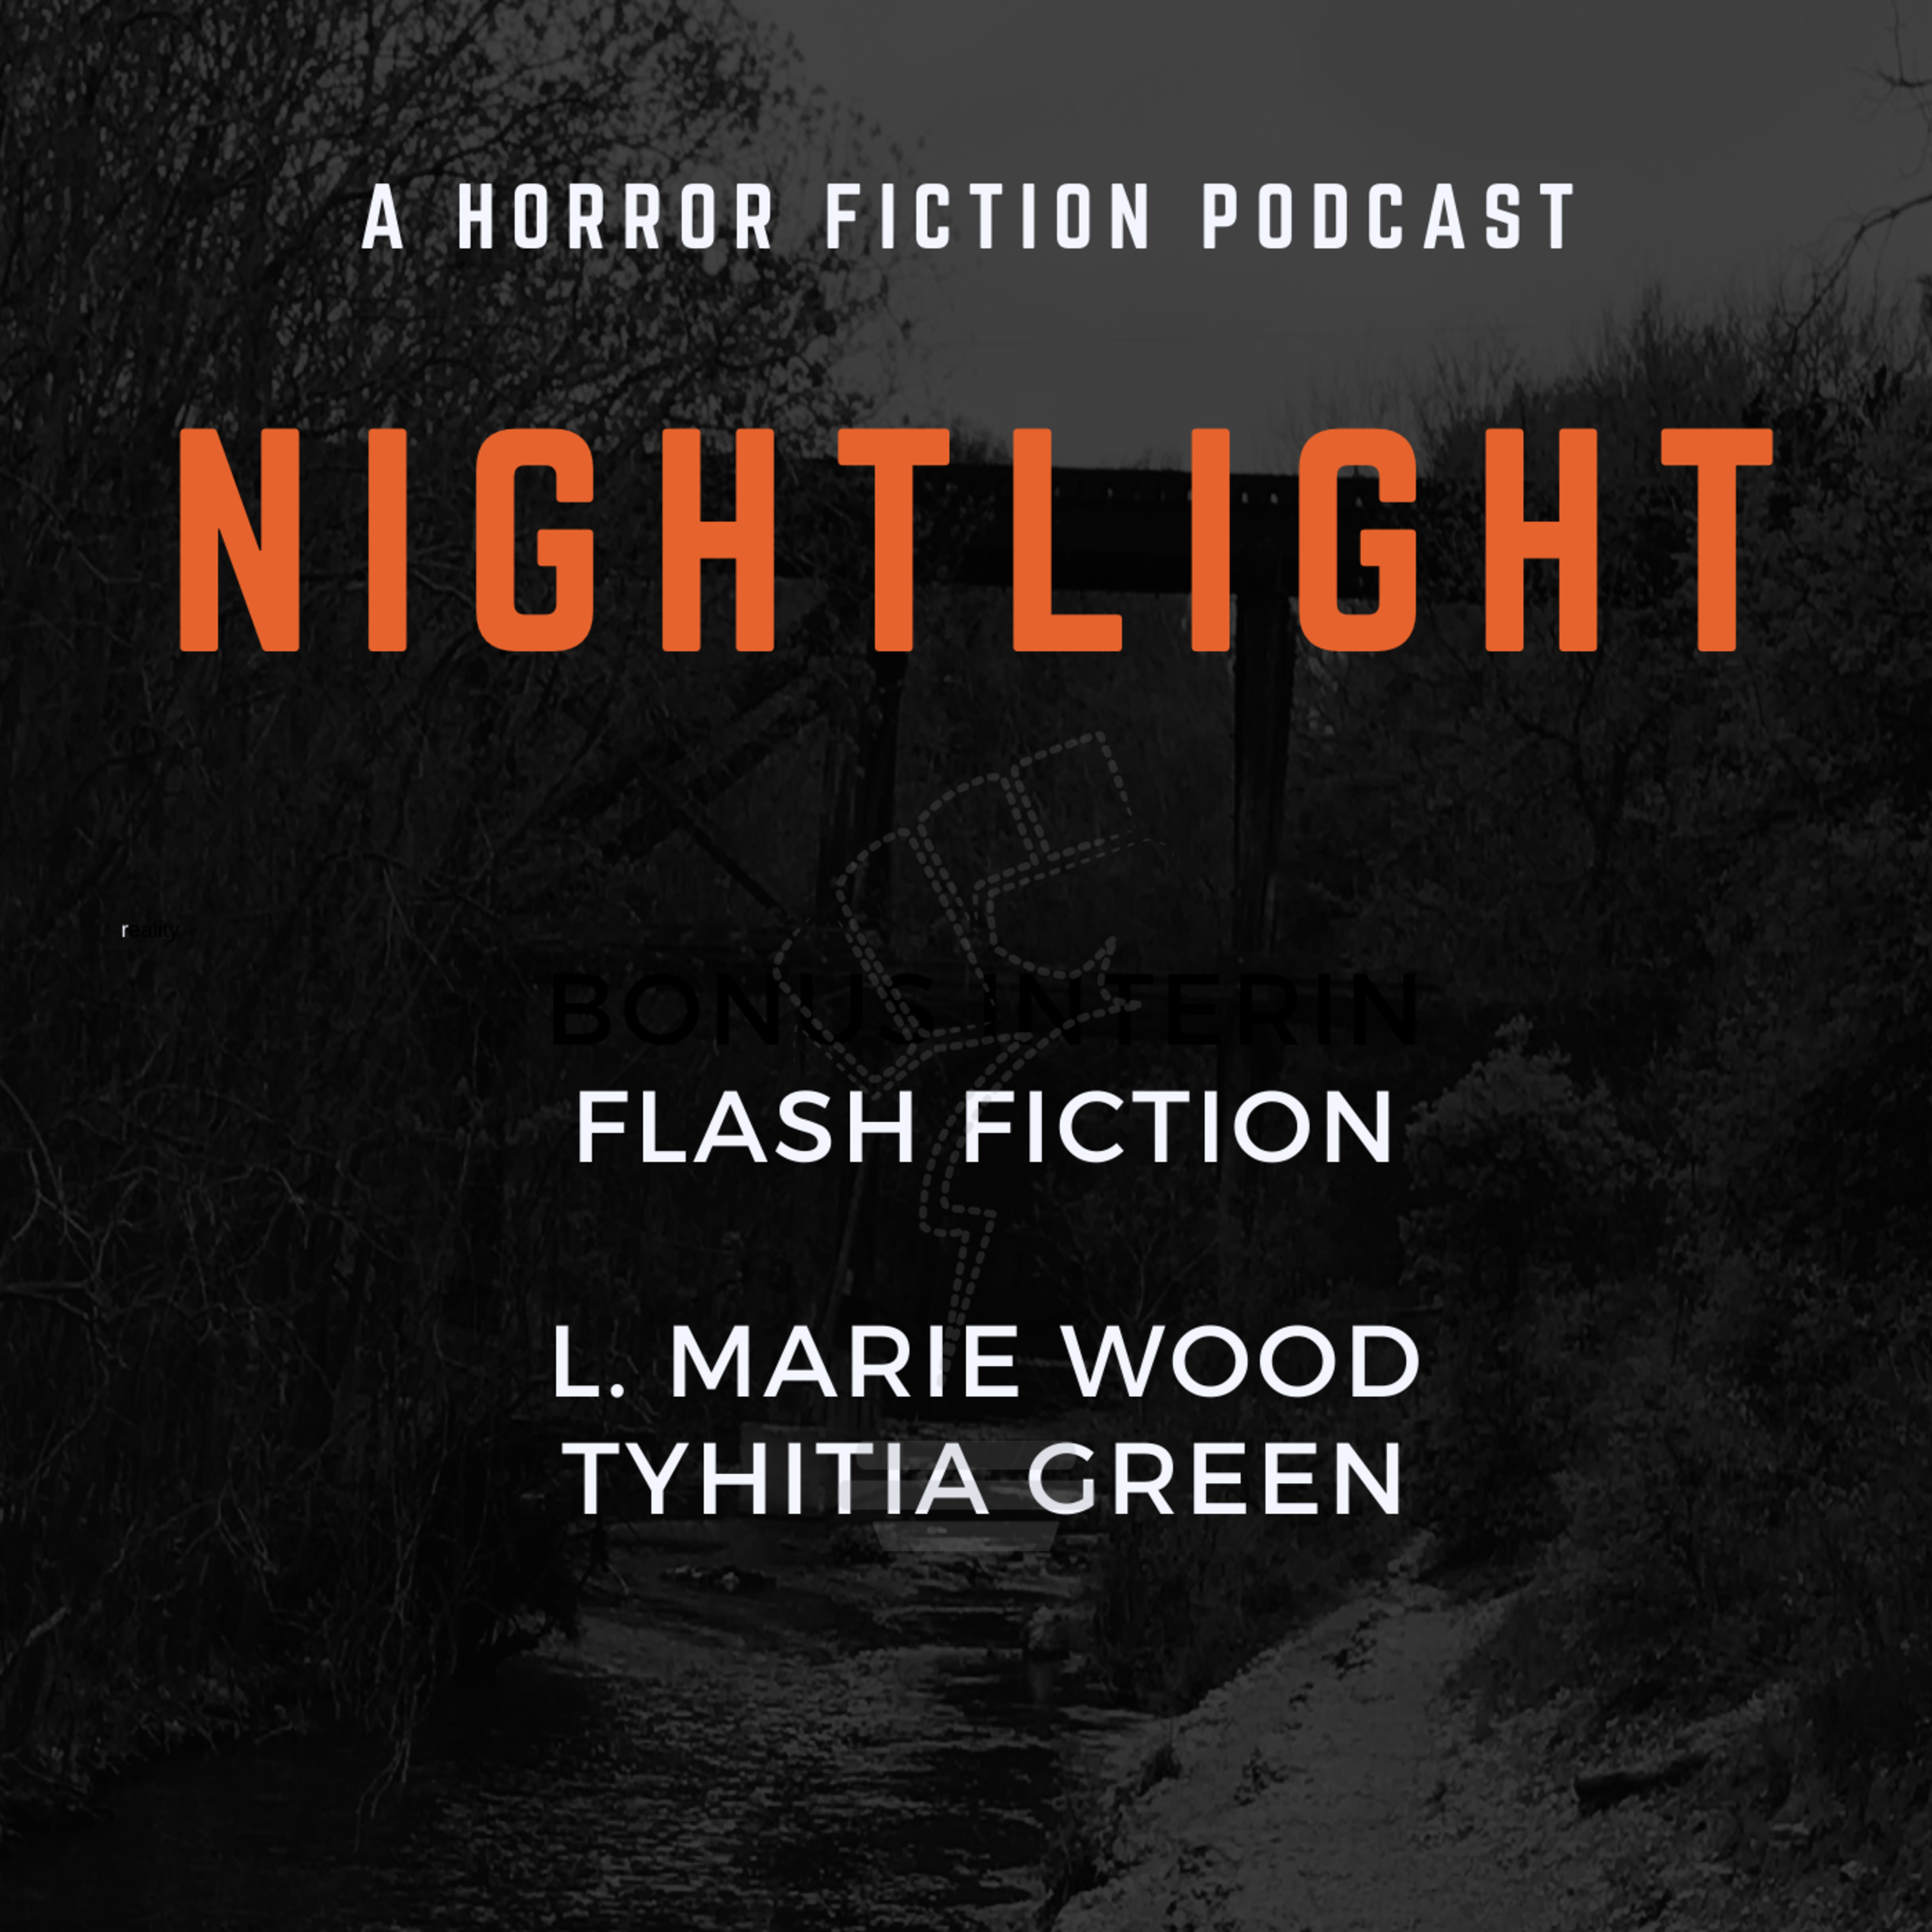 "NIGHTLIGHT: A Horror Fiction Podcast" Podcast